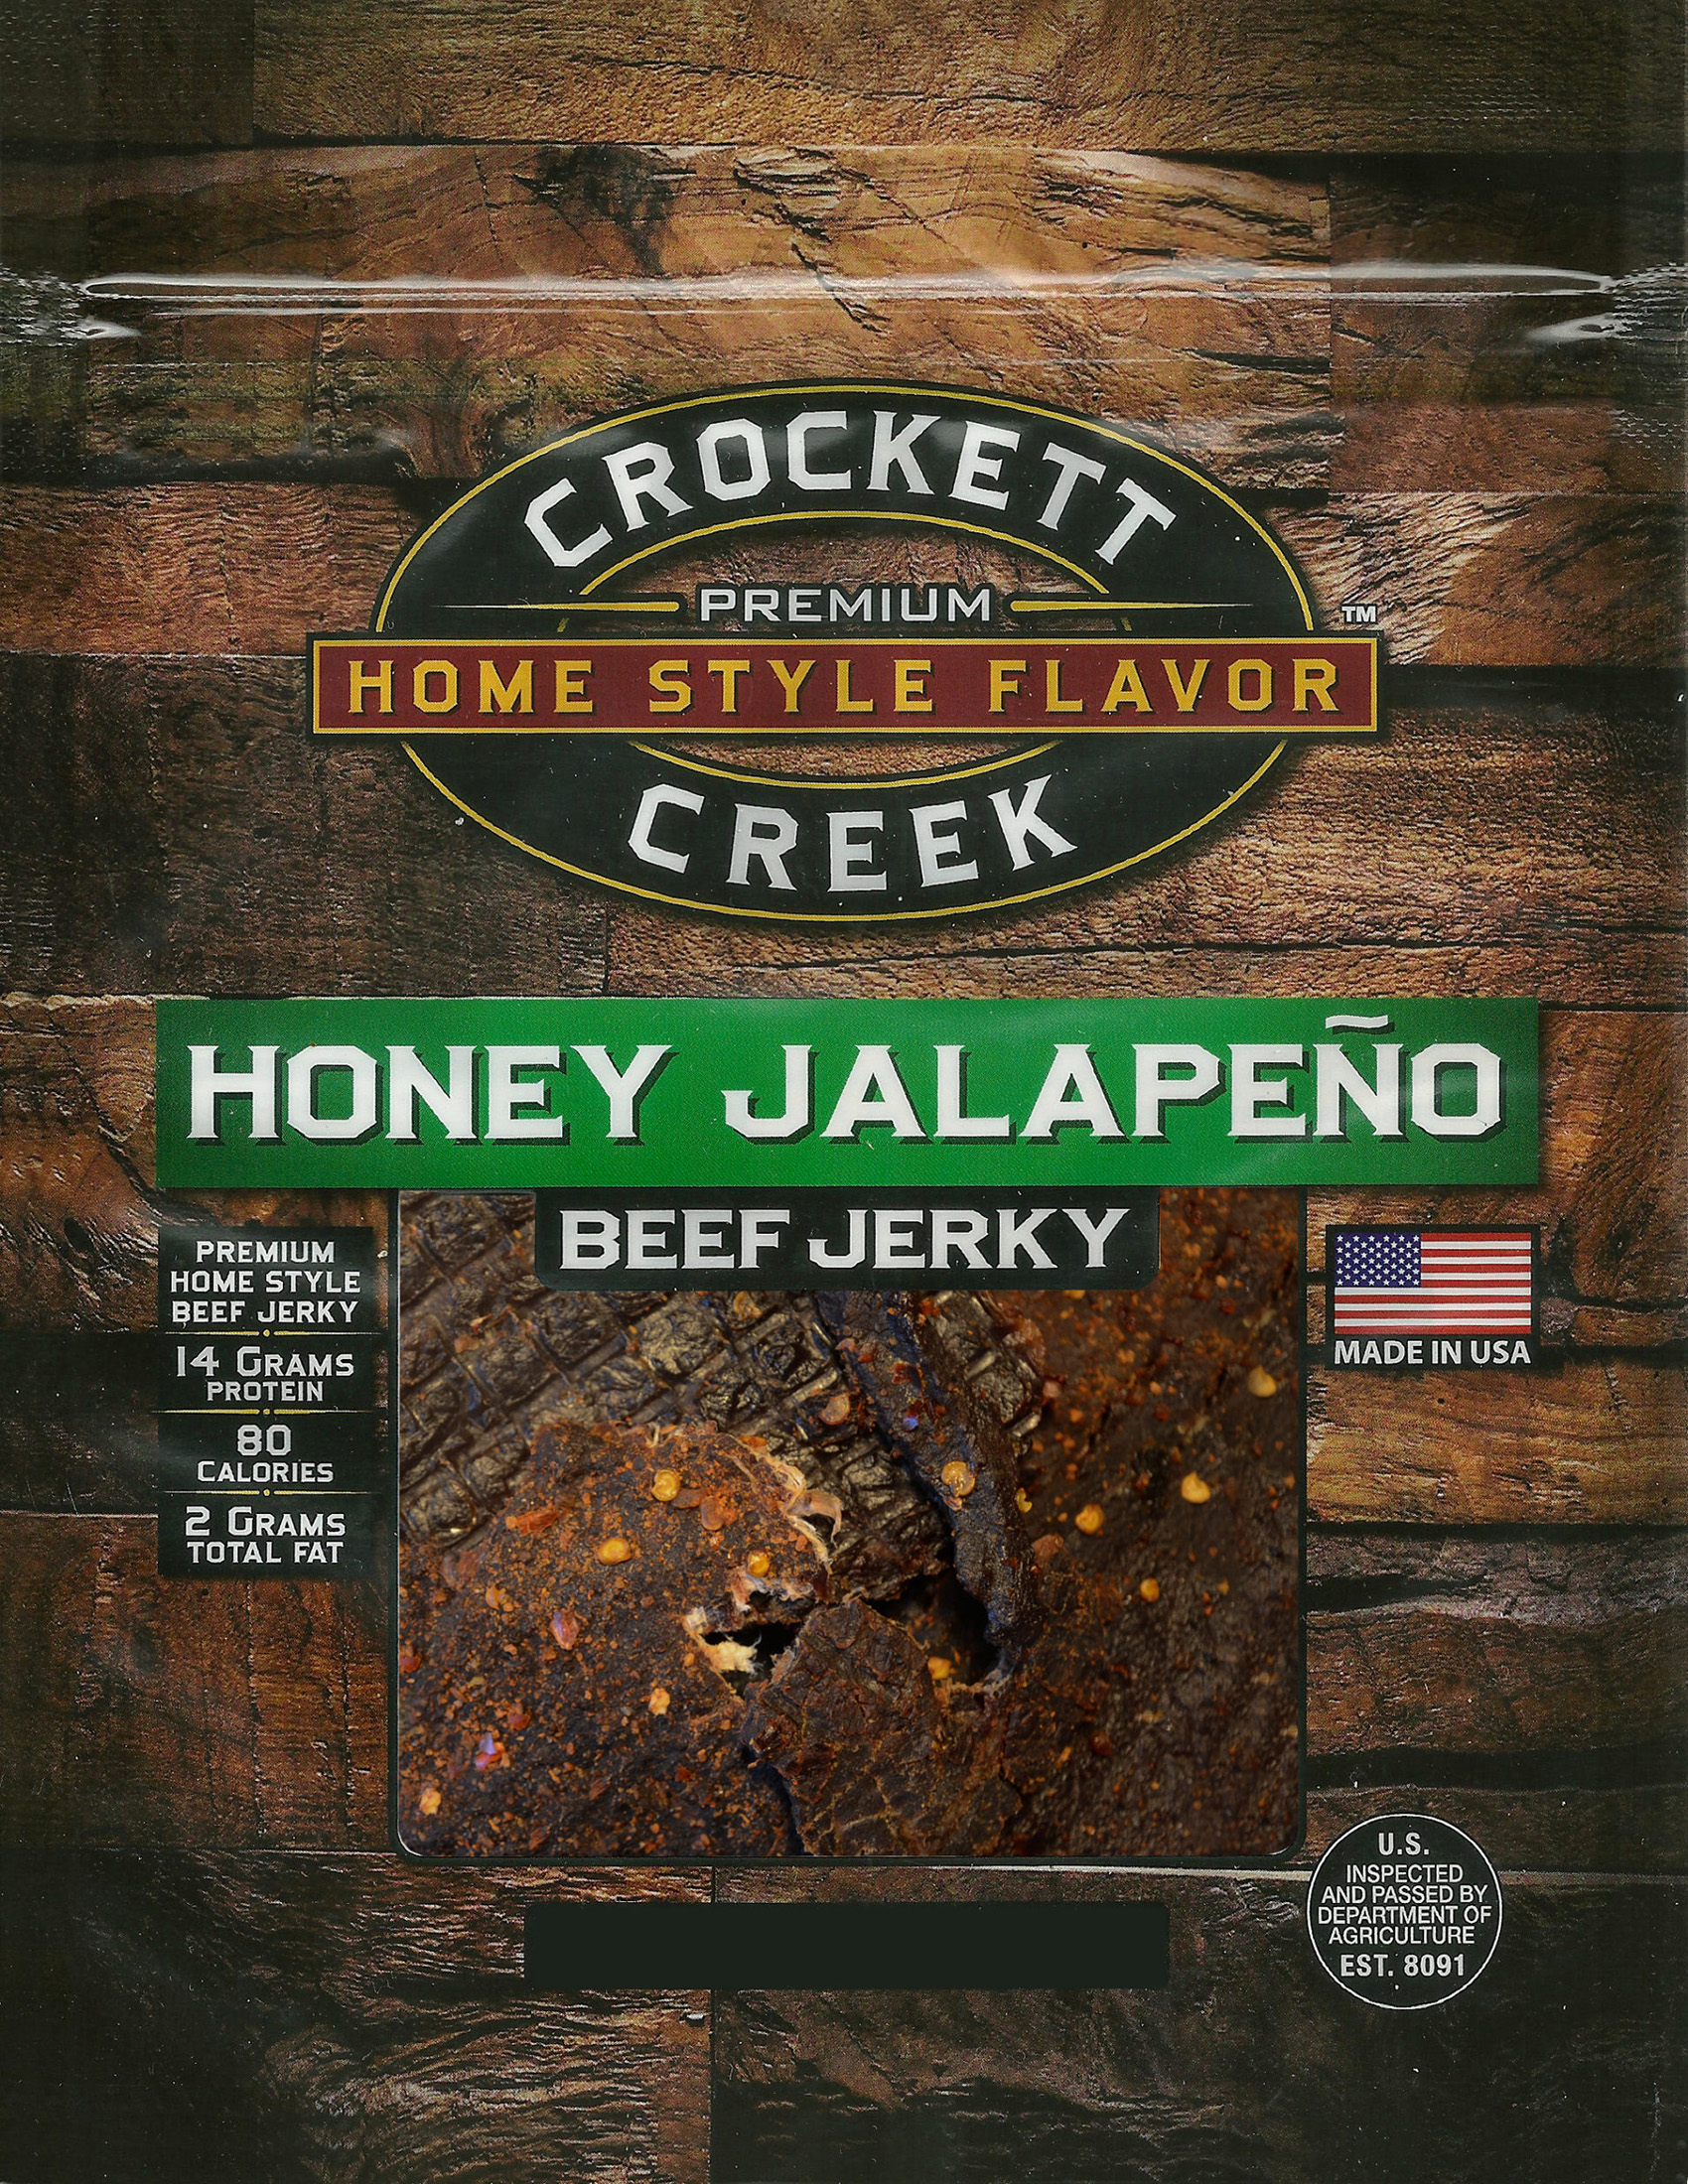 Crockett Creek Honey Jalapeno Beef Jerky